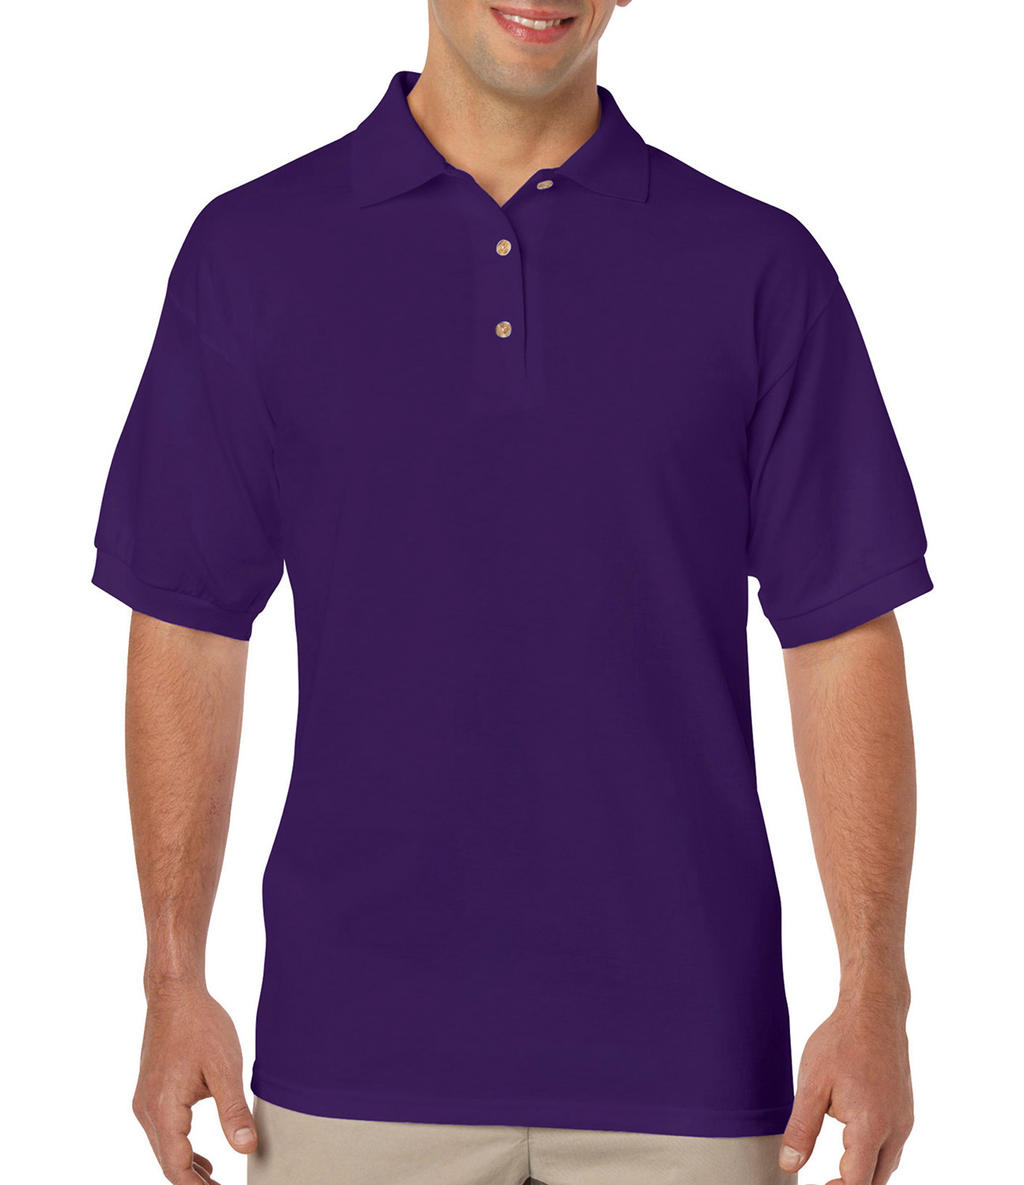  DryBlend Adult Jersey Polo in Farbe Purple